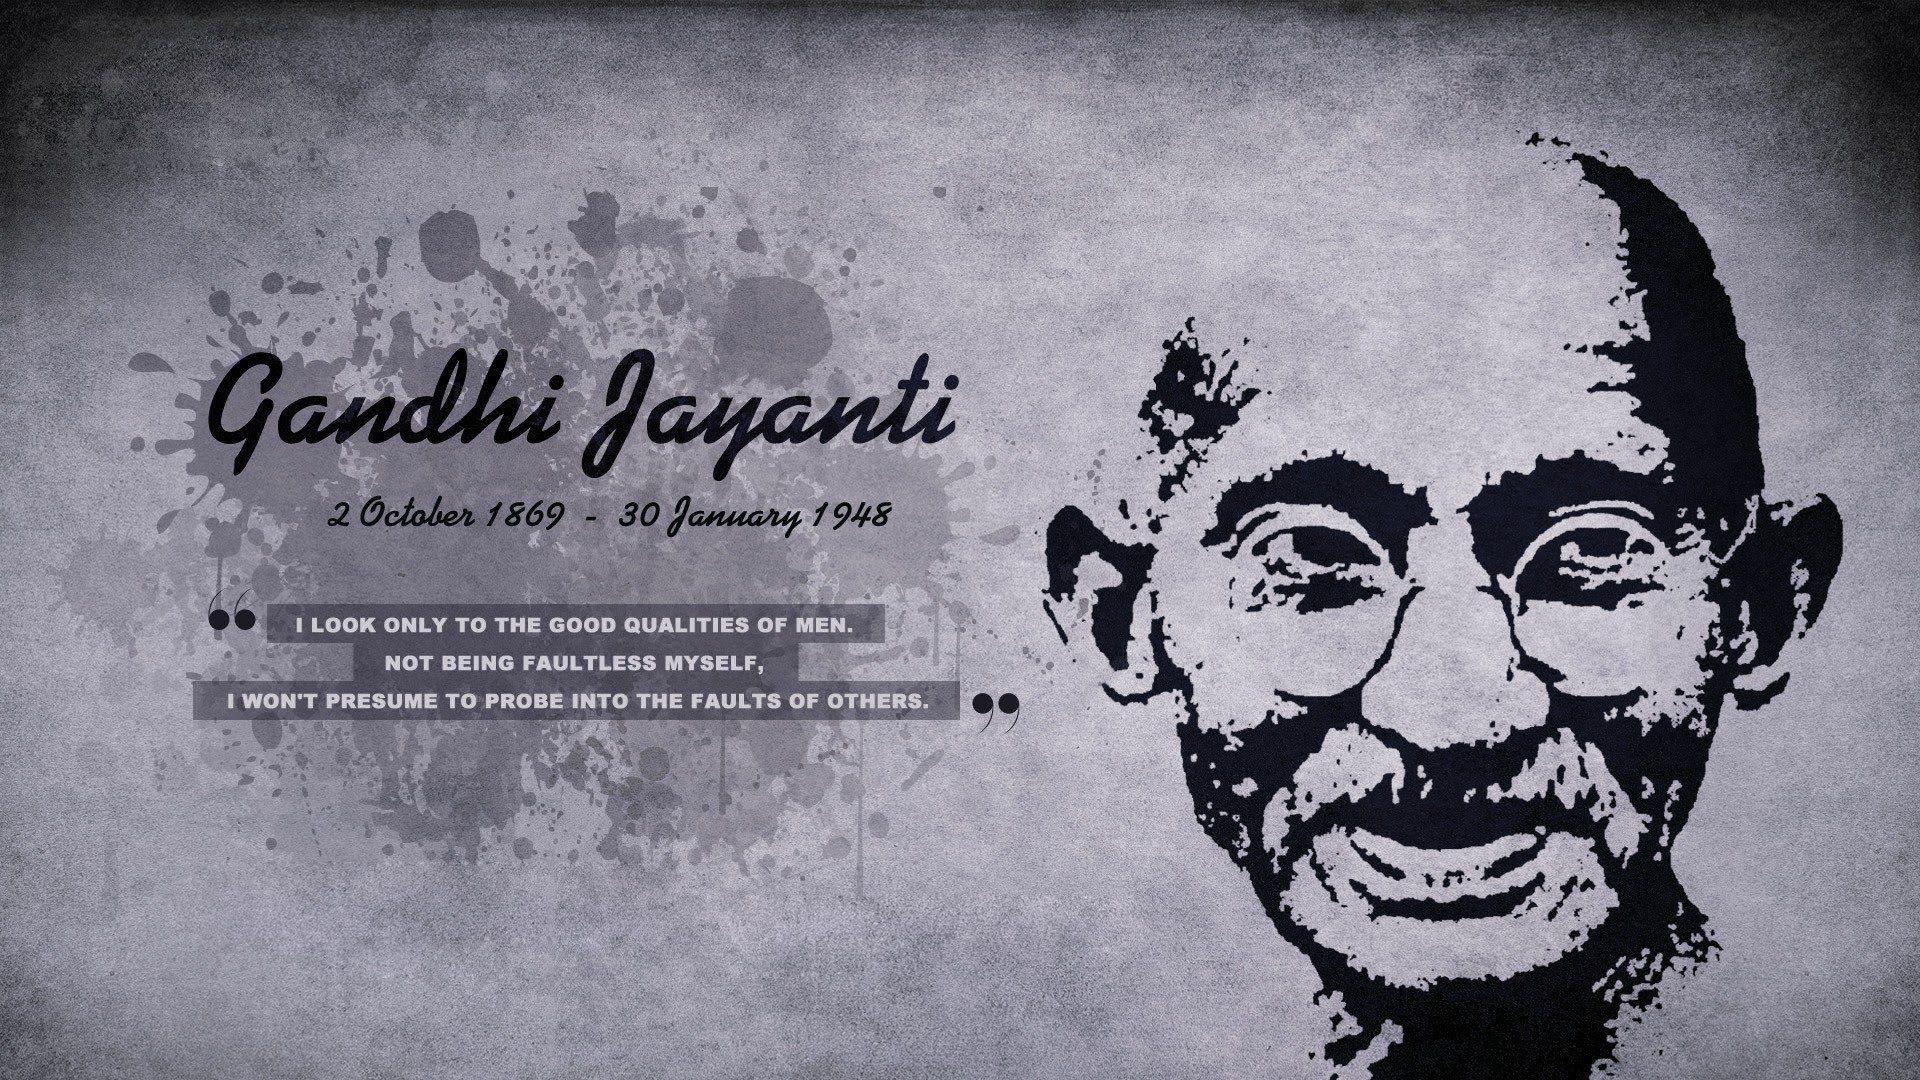 Happy Mahatma Gandhi Jayanti 2015 Best Quotes Information Speech Songs Videos Wallpaper Image